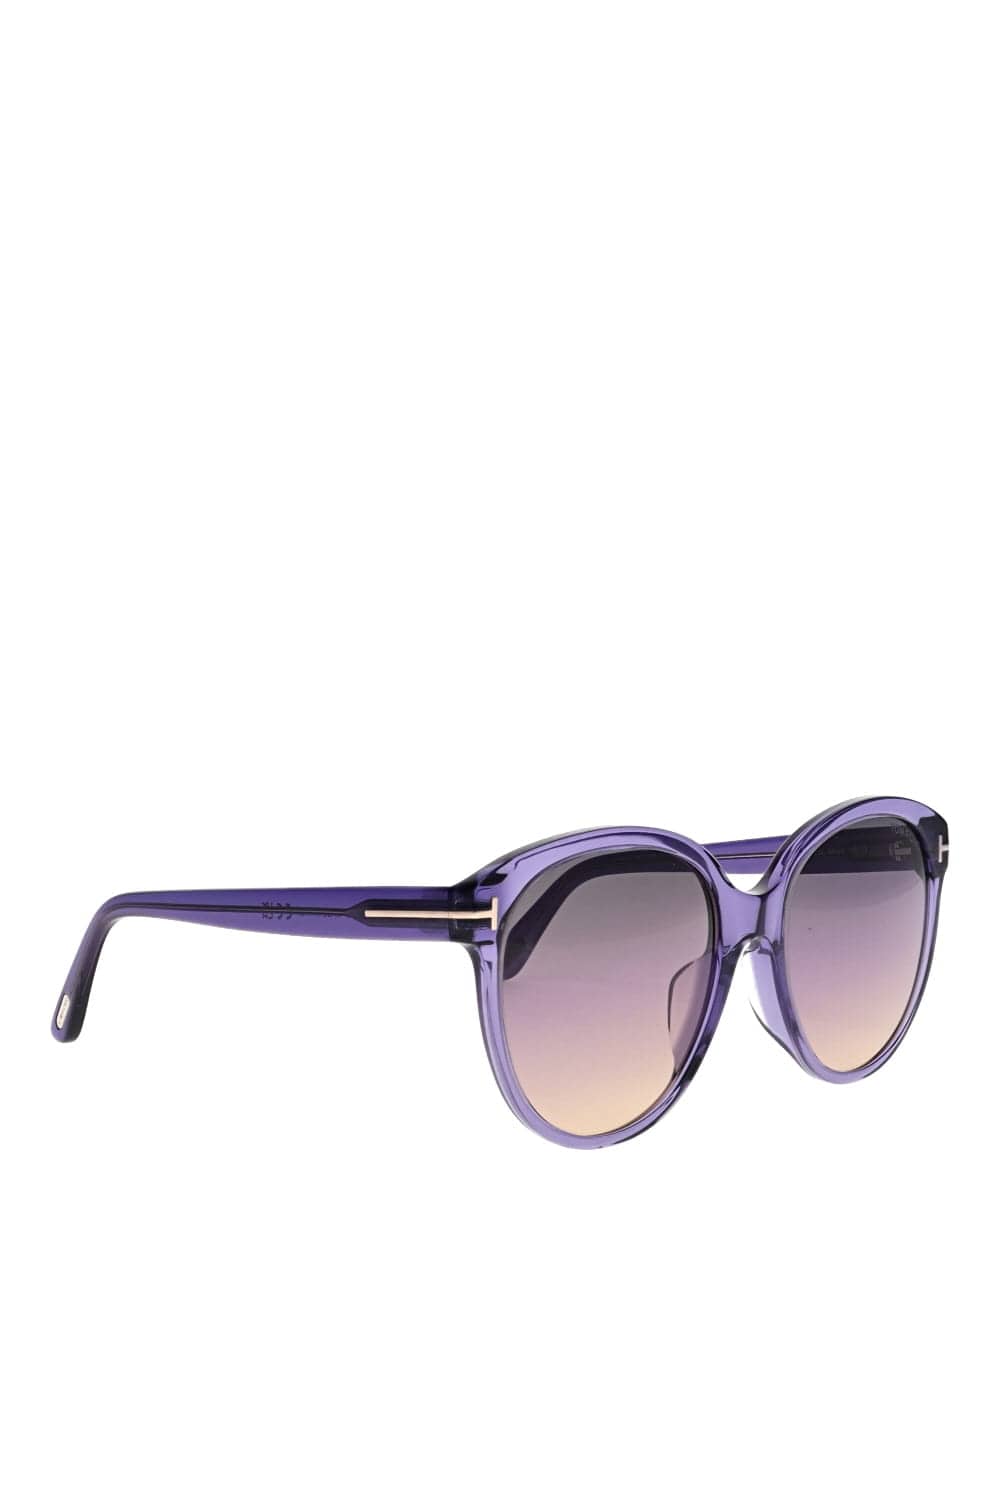 Tom Ford Eyewear FT0957-D Transparent Purple Sunglasses FT0957-D Purple/Smoke